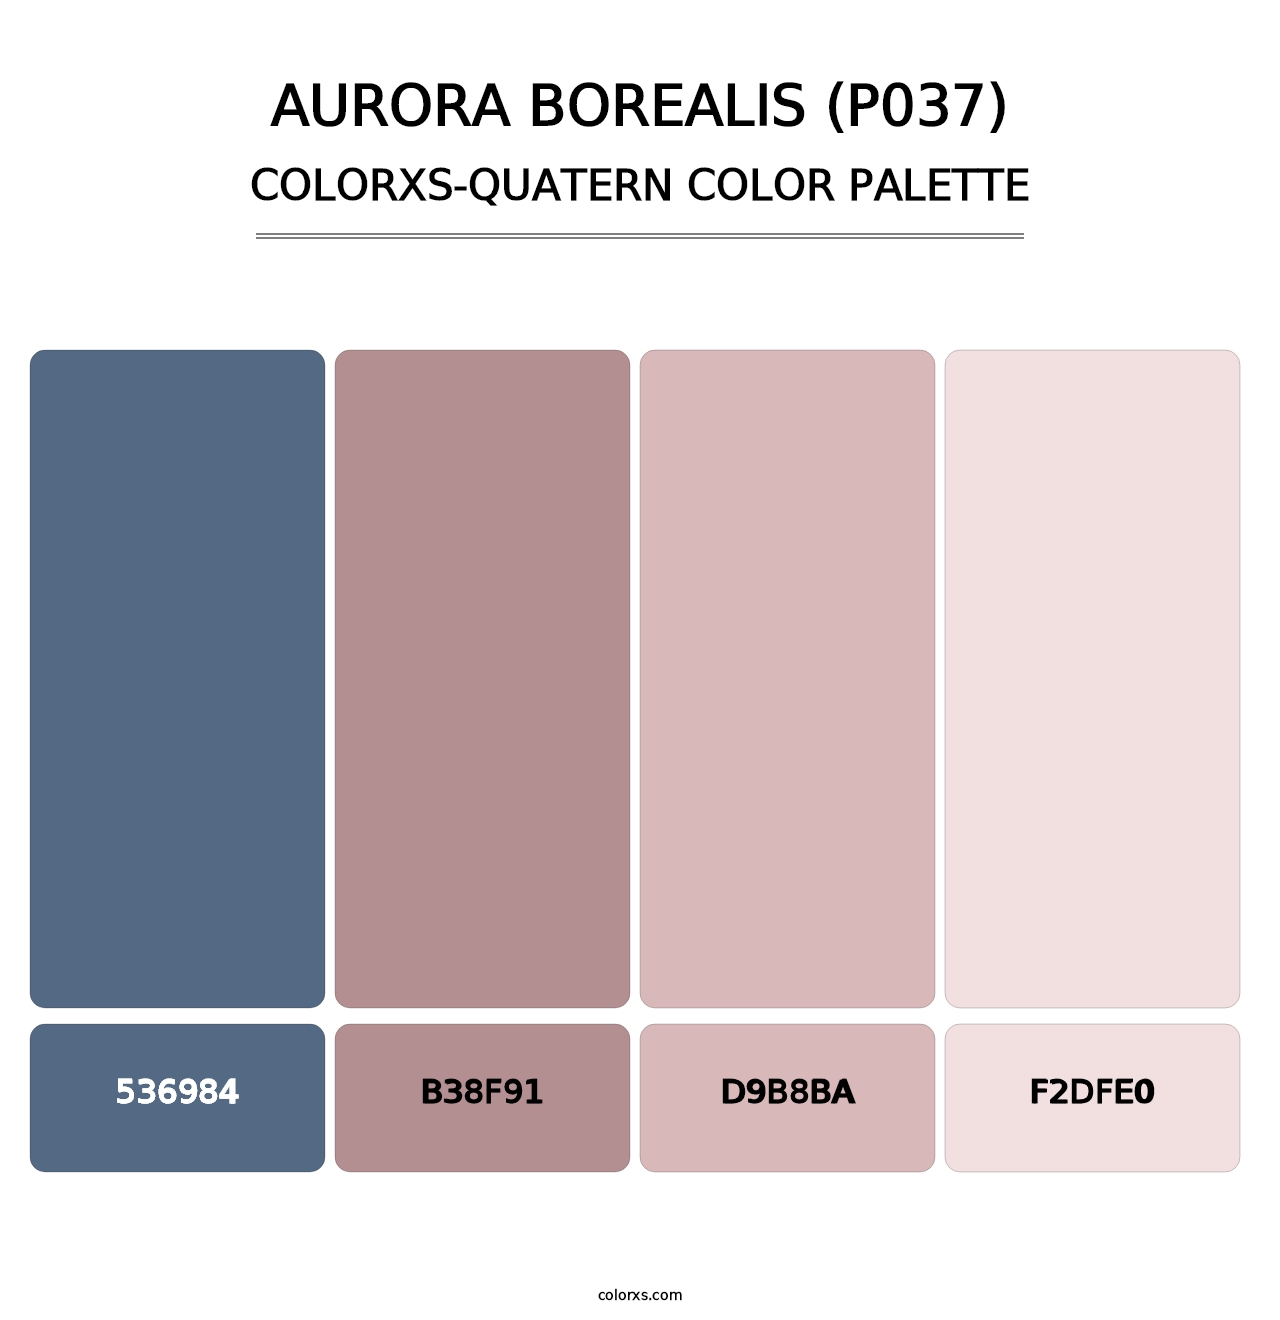 Aurora Borealis (P037) - Colorxs Quatern Palette